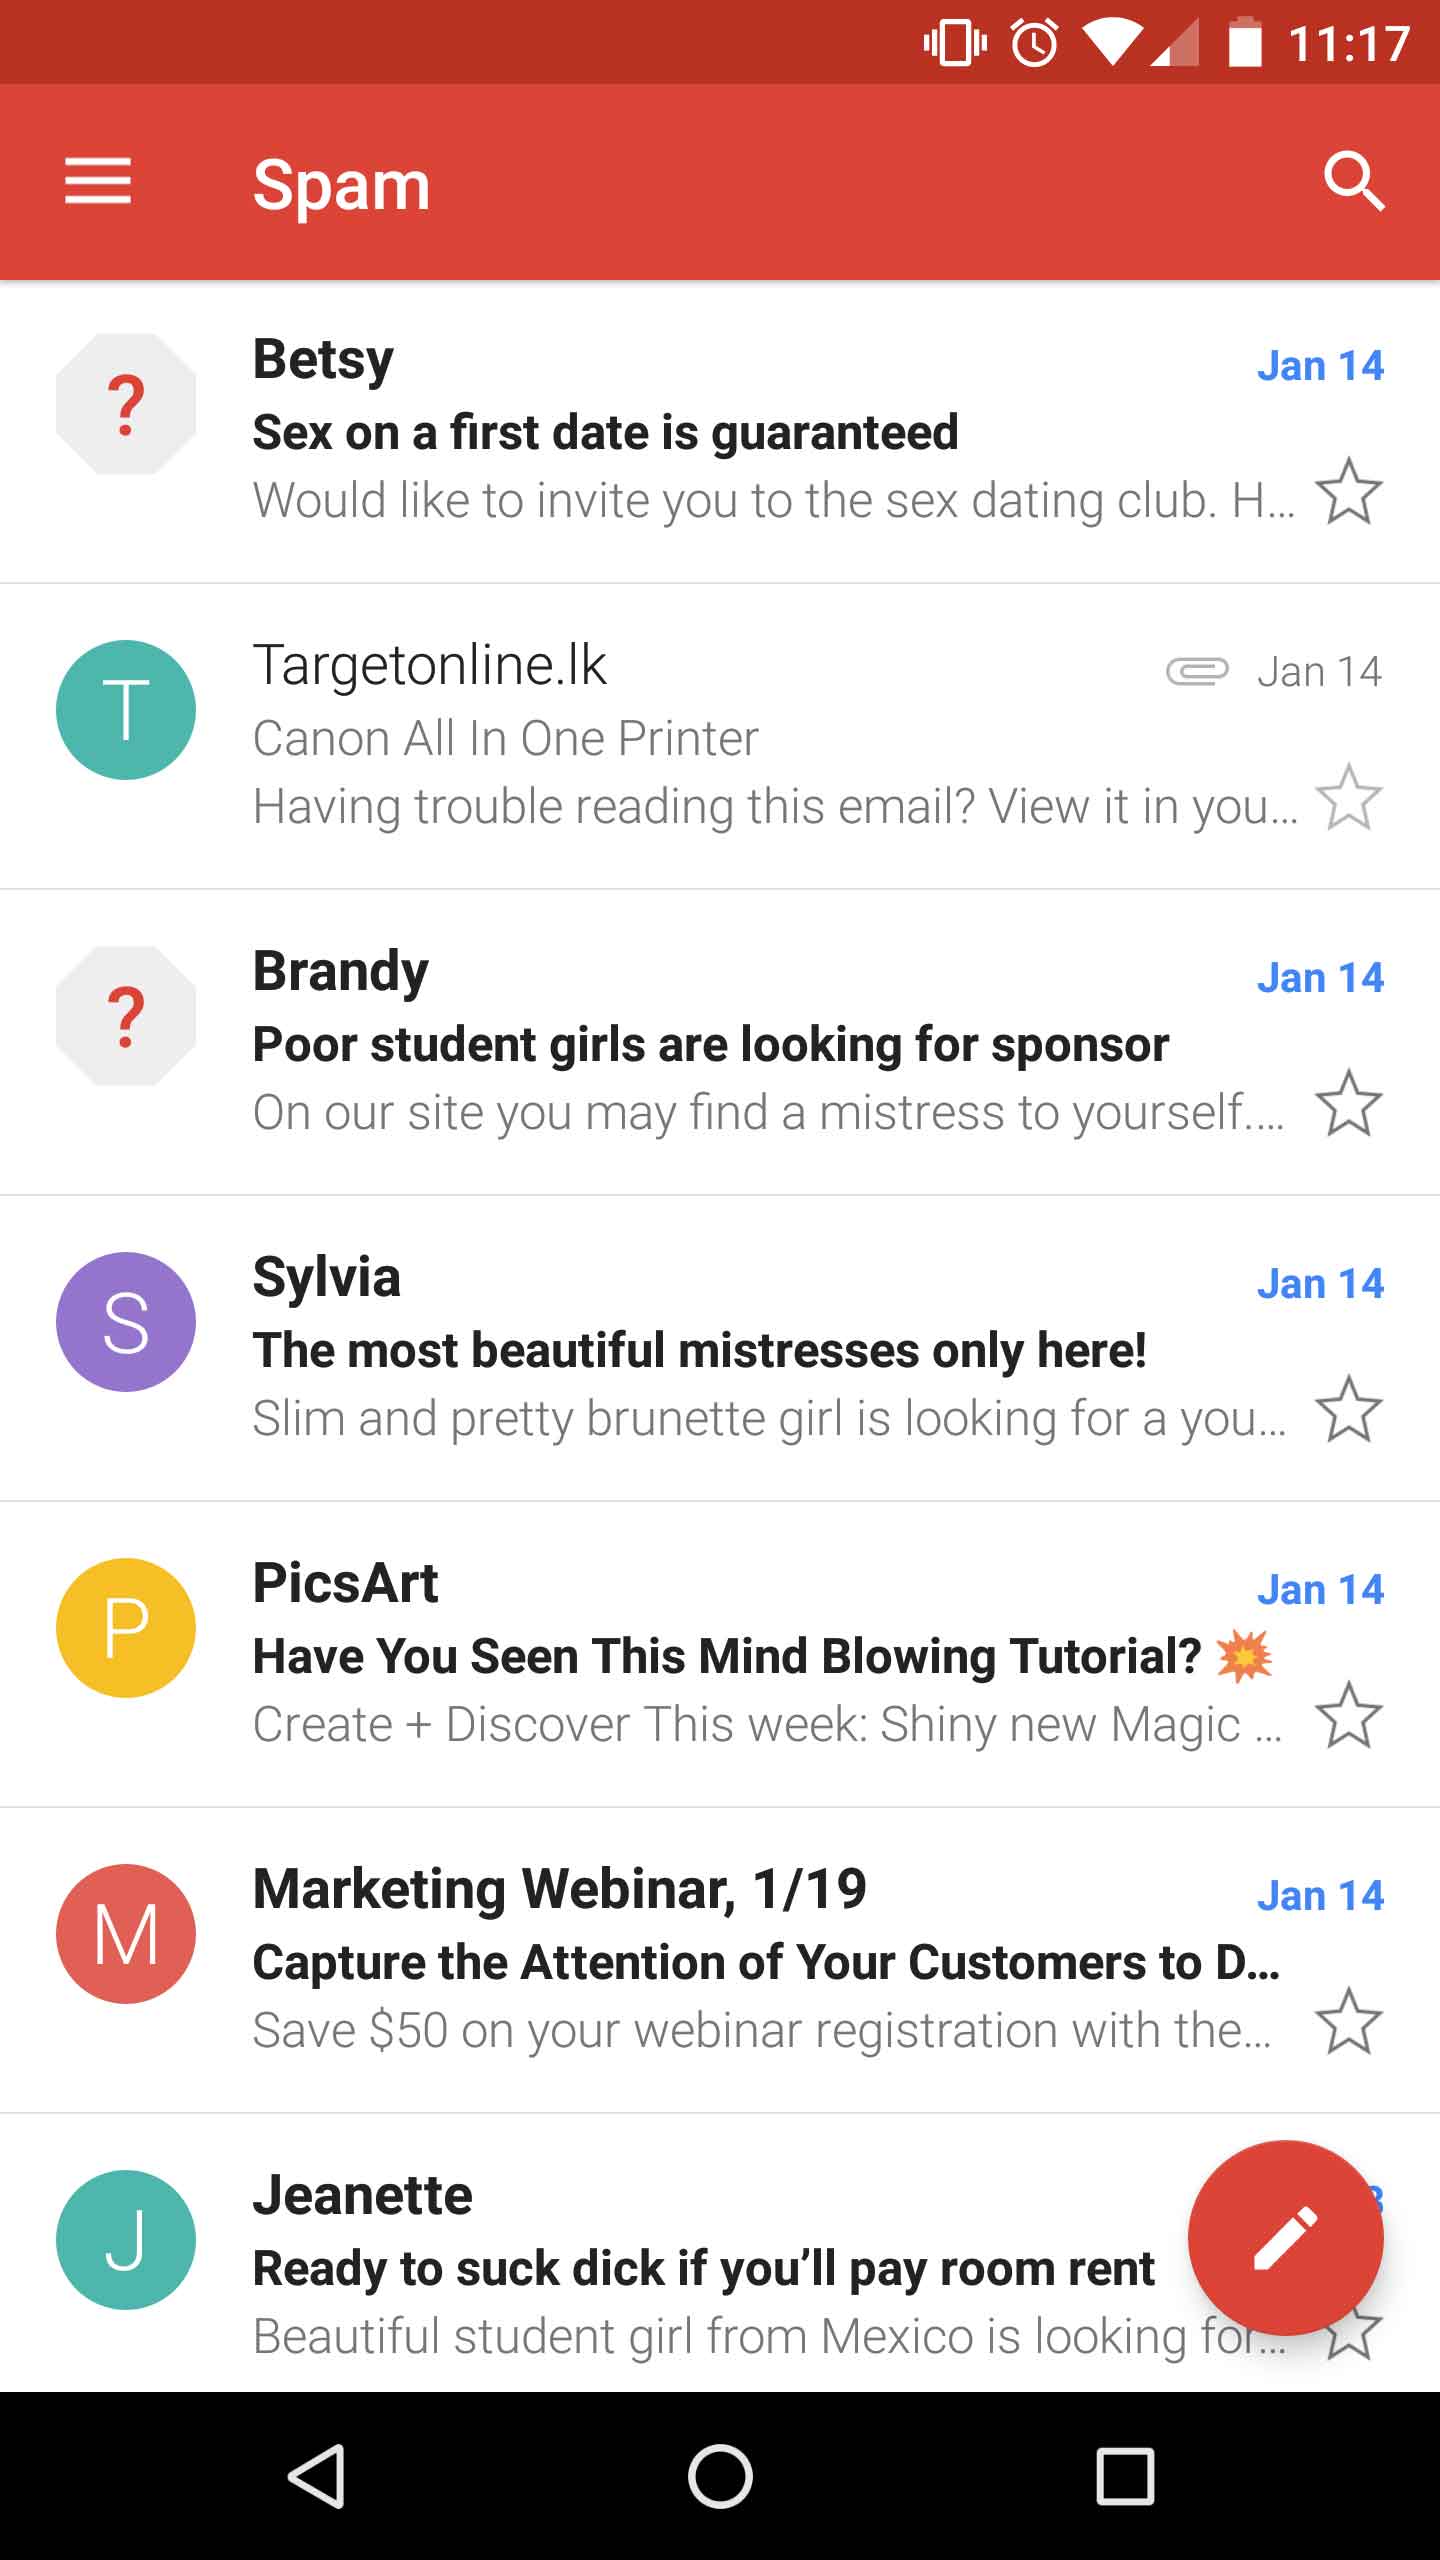 Sri Lanka Email Marketing